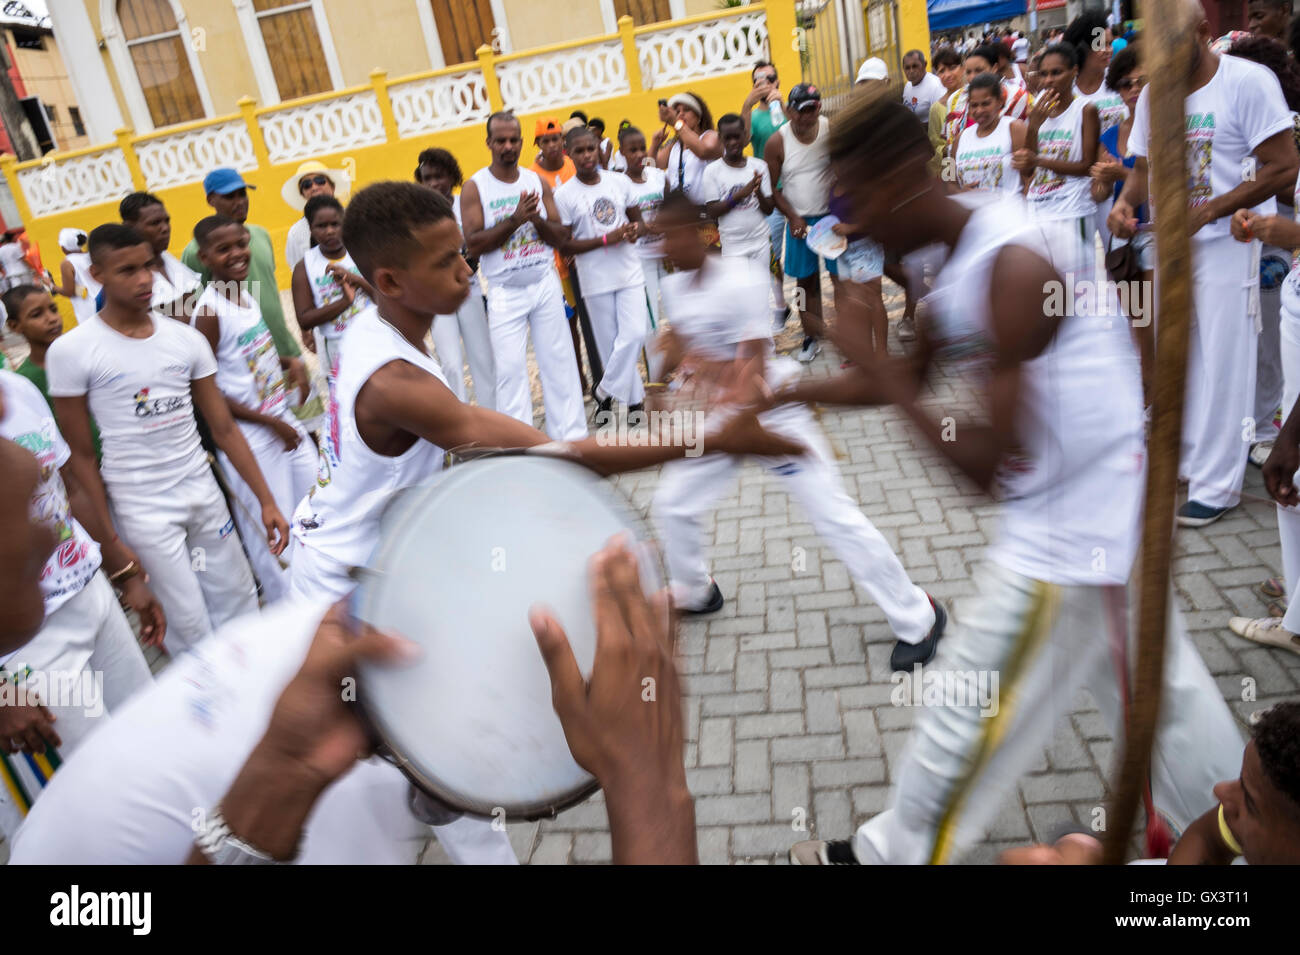 SALVADOR, Brasilien - 2. Februar 2016: Brasilianische Capoeira-Gruppe führt bei einem Outdoor-Festival im Stadtteil Rio Vermelho. Stockfoto